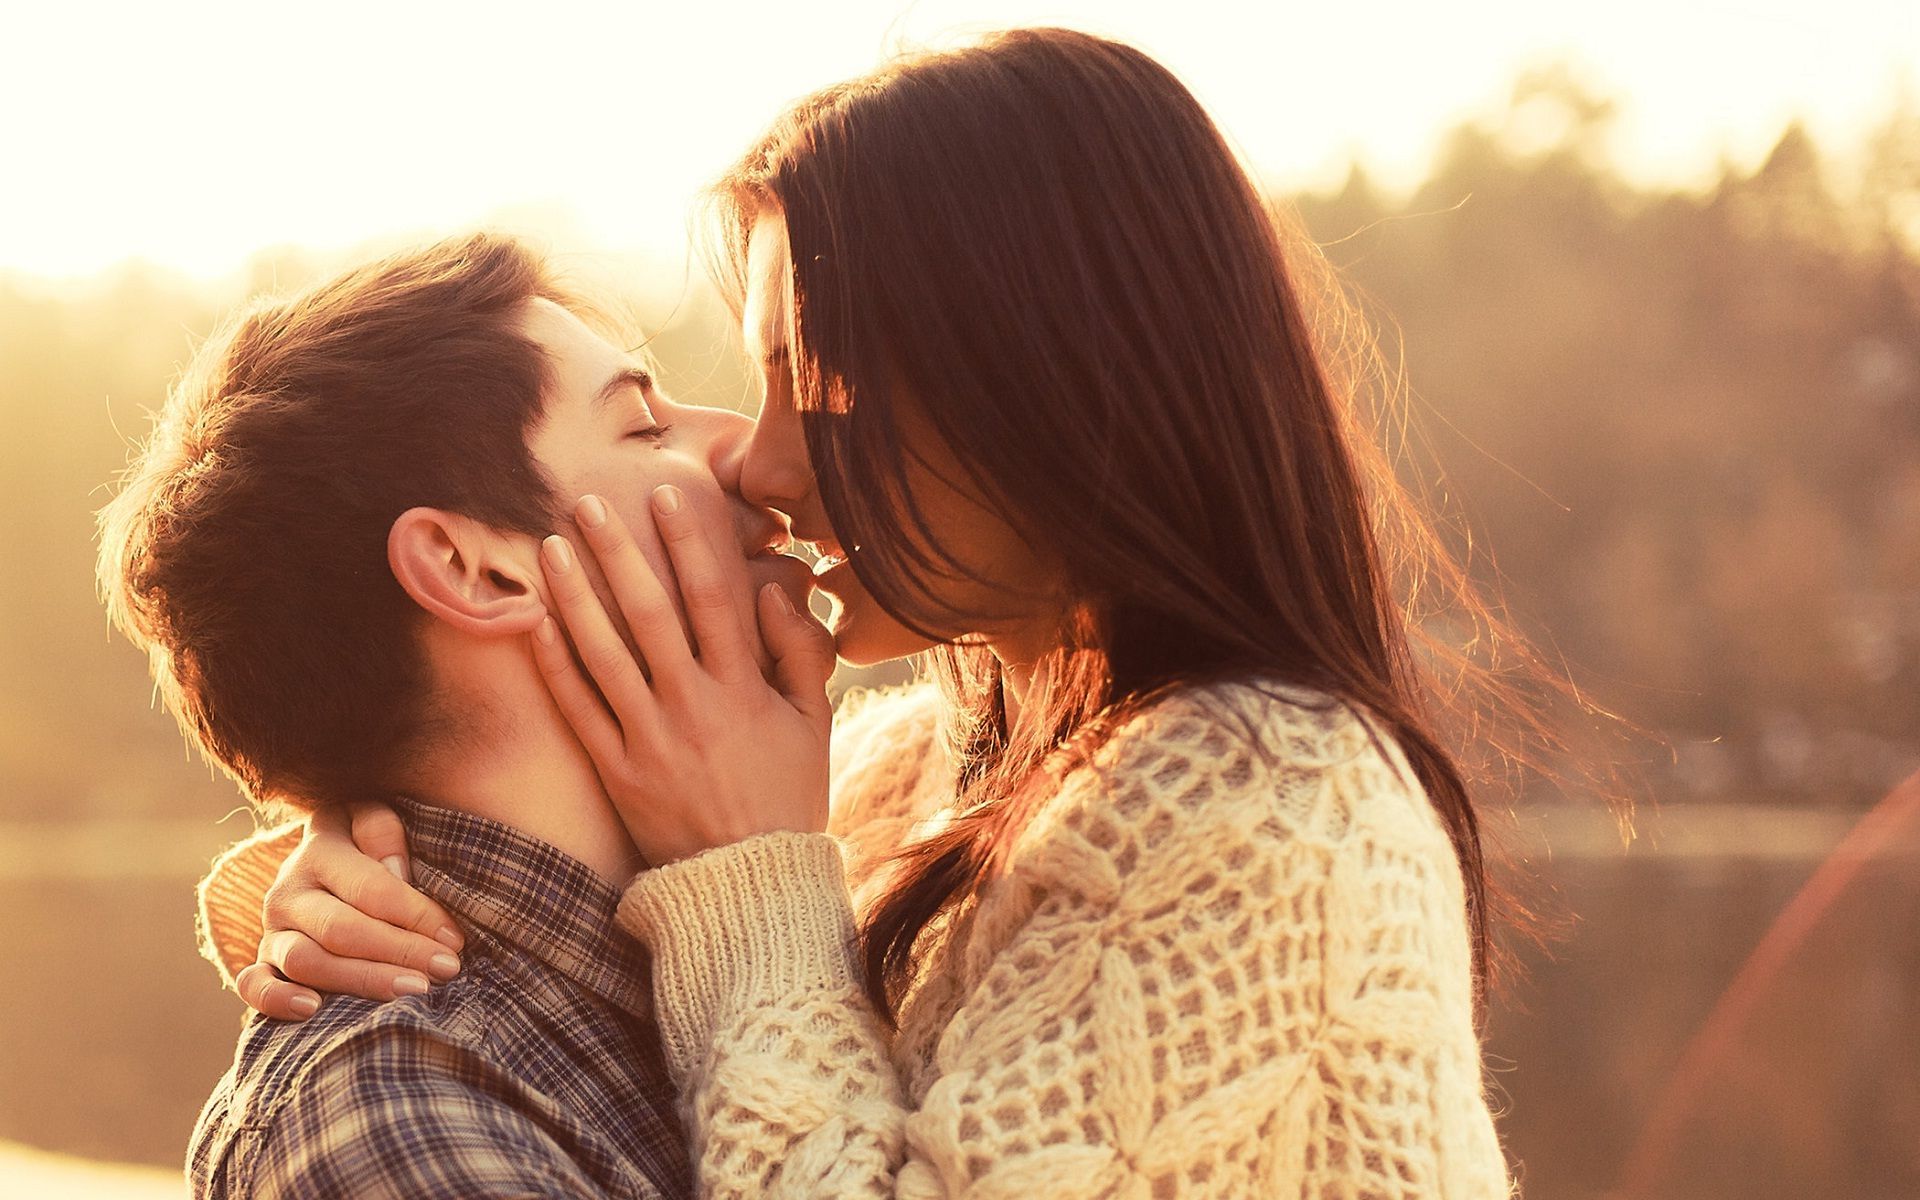 Brunette kiss. Красивый поцелуй. Объятия влюбленных. Пара влюбленных. Влюбленные парочки.